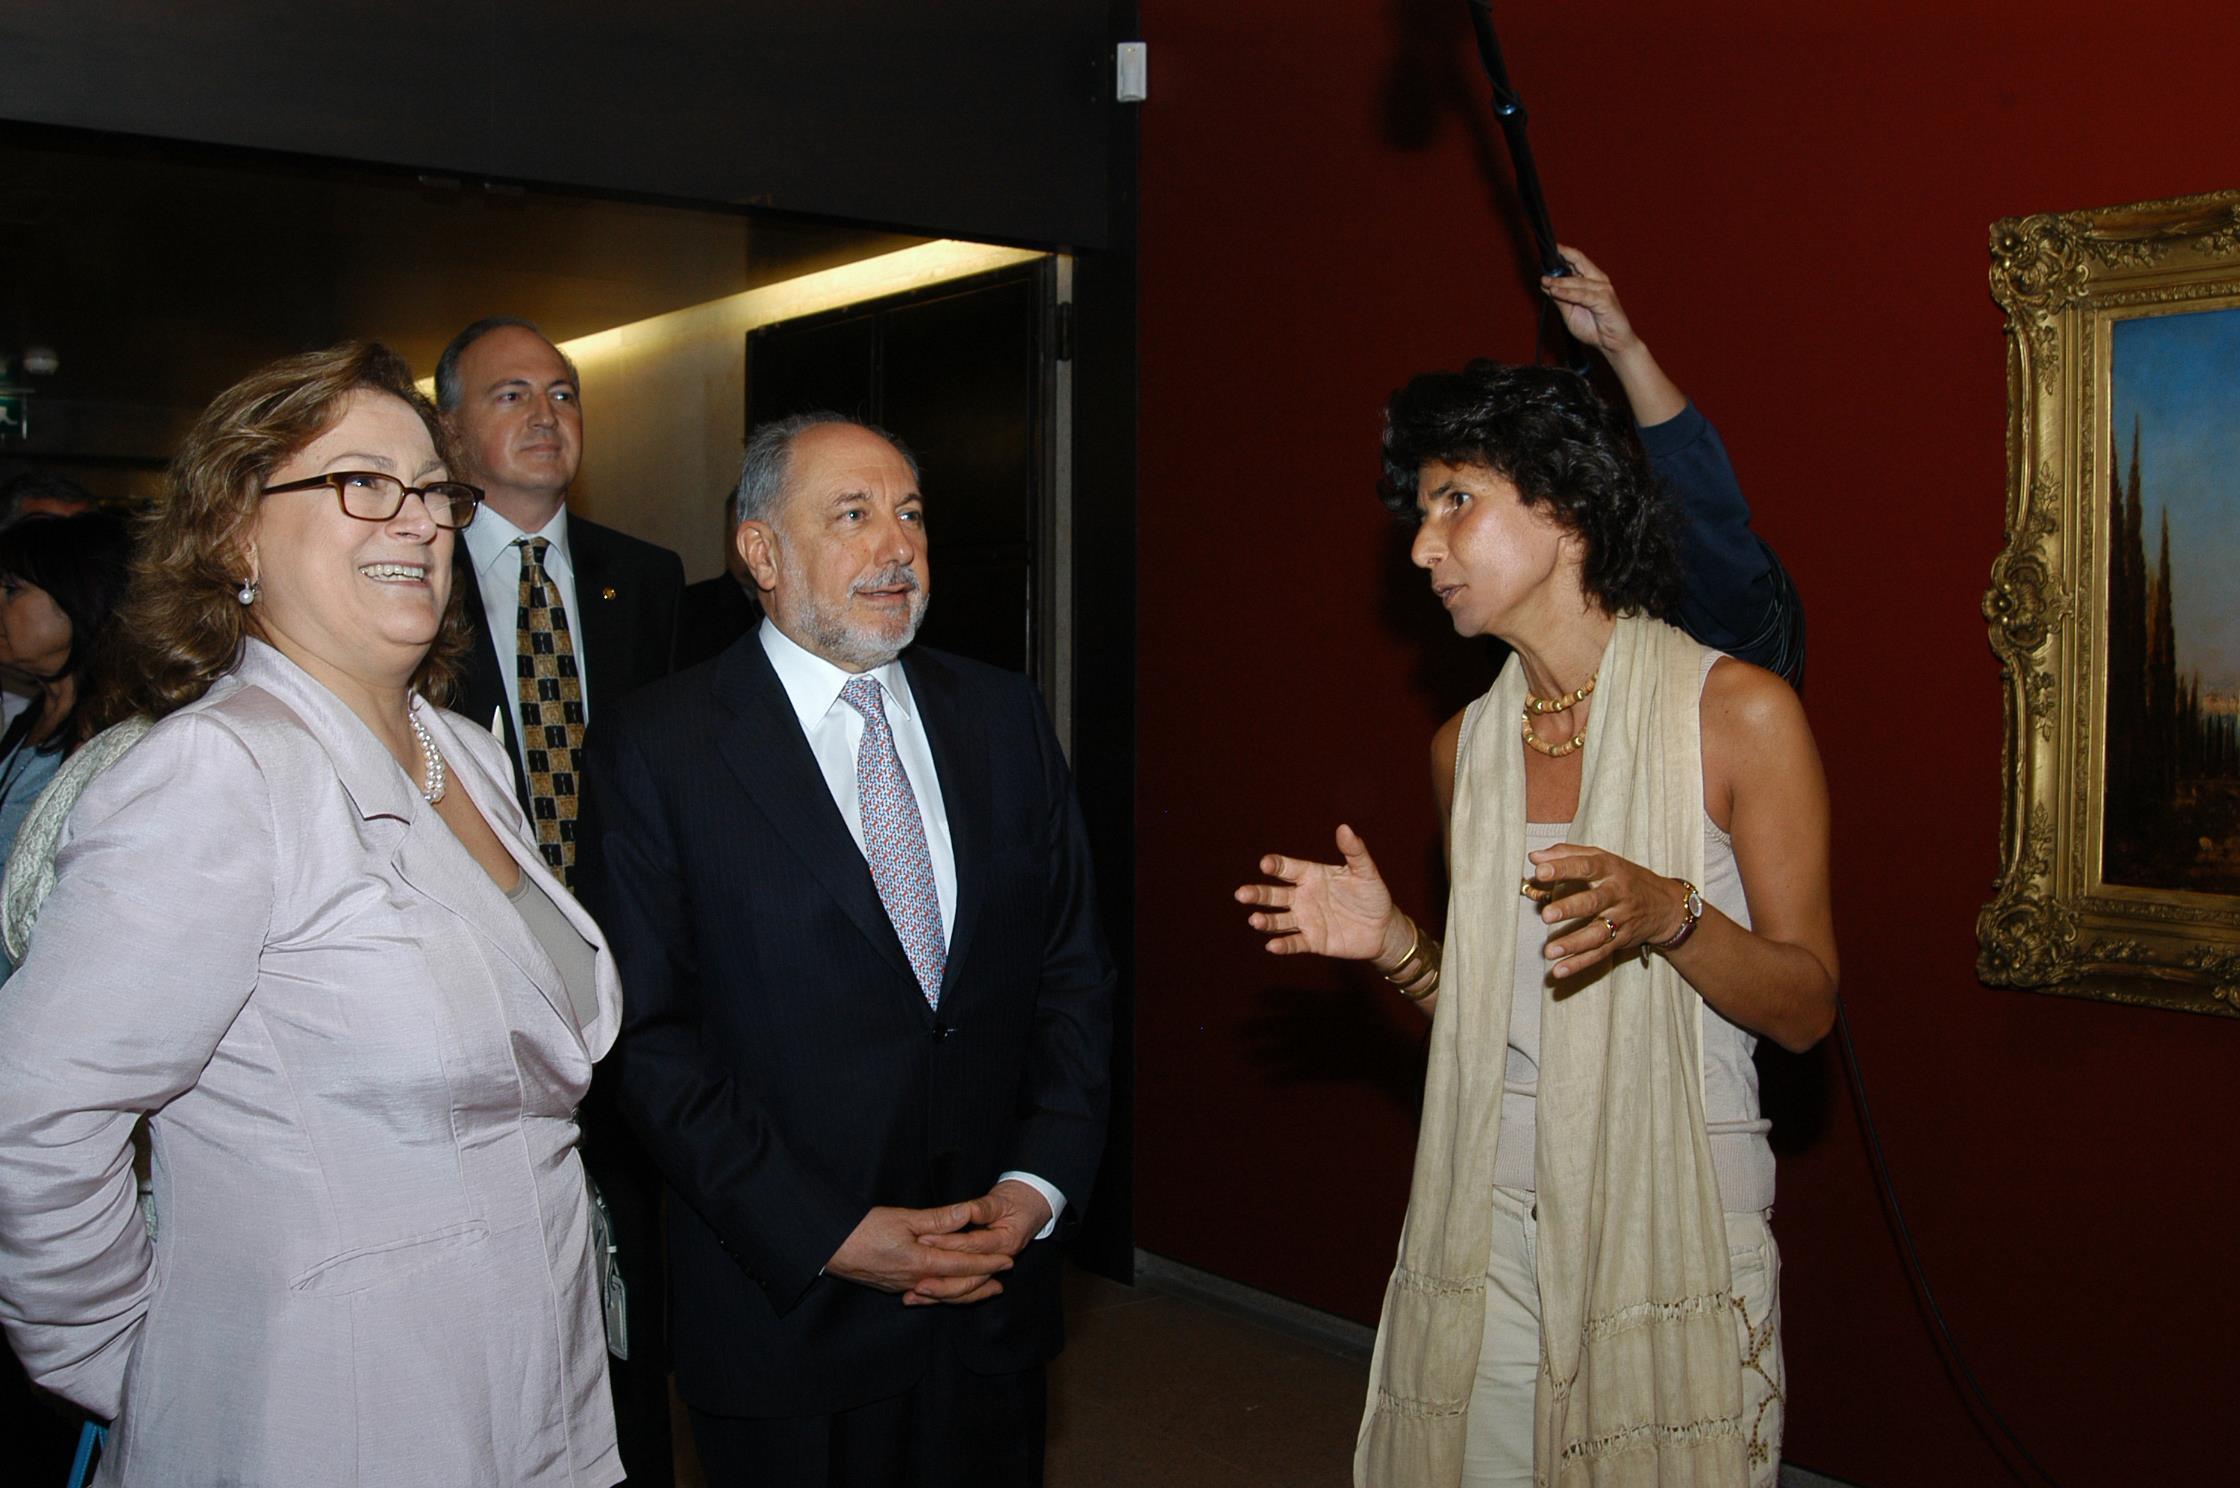 Conferência de imprensa. Güler Sabanci, Emílio Rui Vilar e Luísa Sampaio